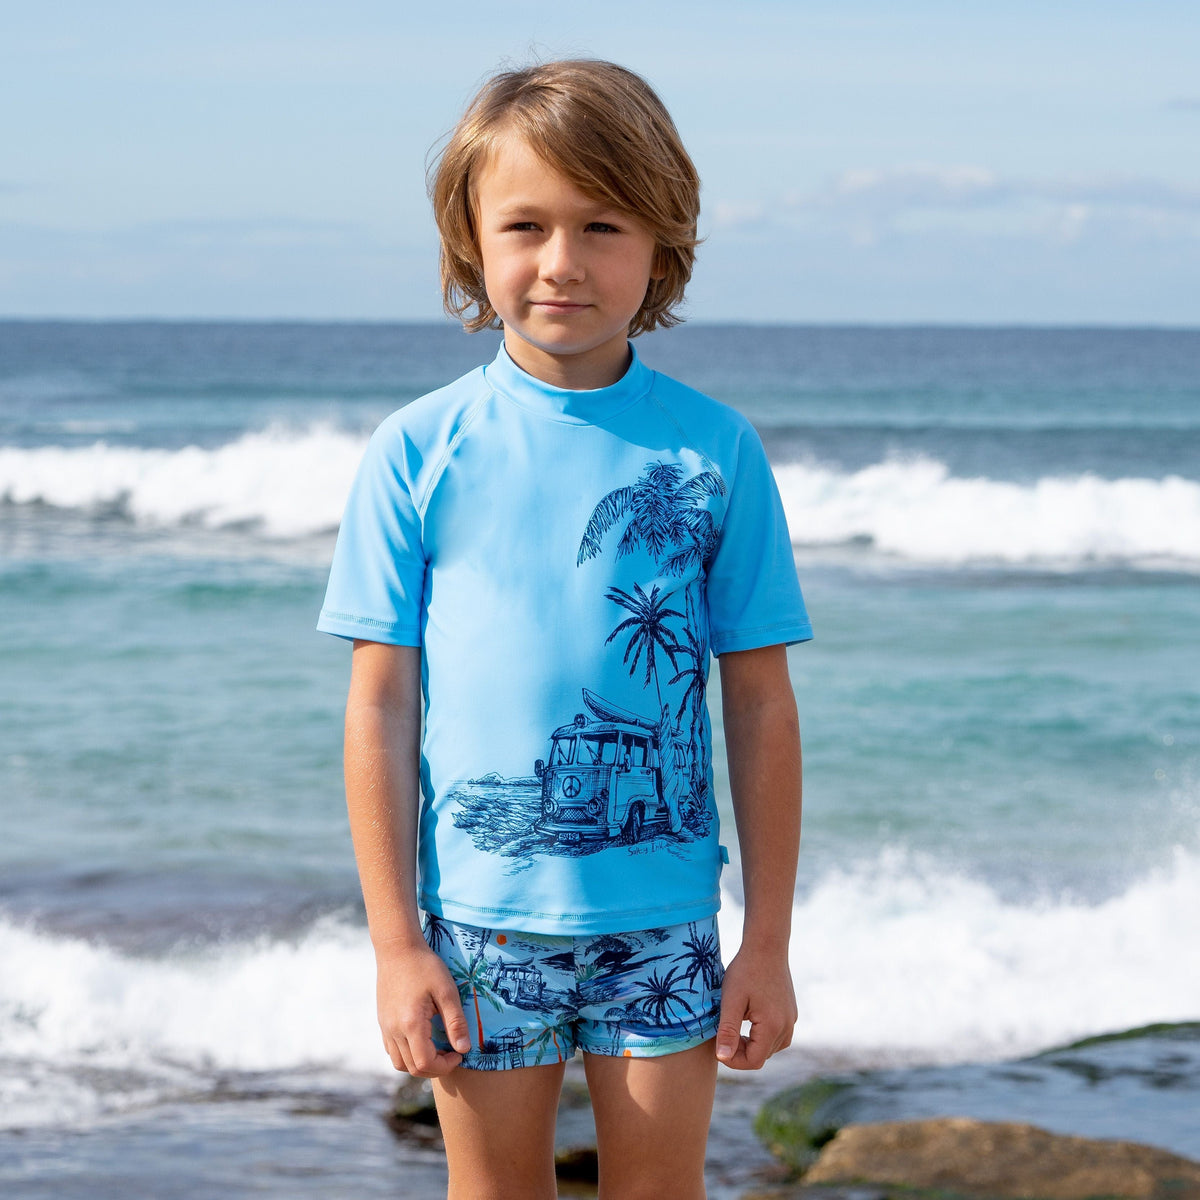 Boys Vintage Surf Short Sleeve Rashvest - Vintage Blue - Salty Ink - Splash Swimwear  - boys, boys 00-7, Boys 8 - 16, Jul23, kids, salty ink - Splash Swimwear 